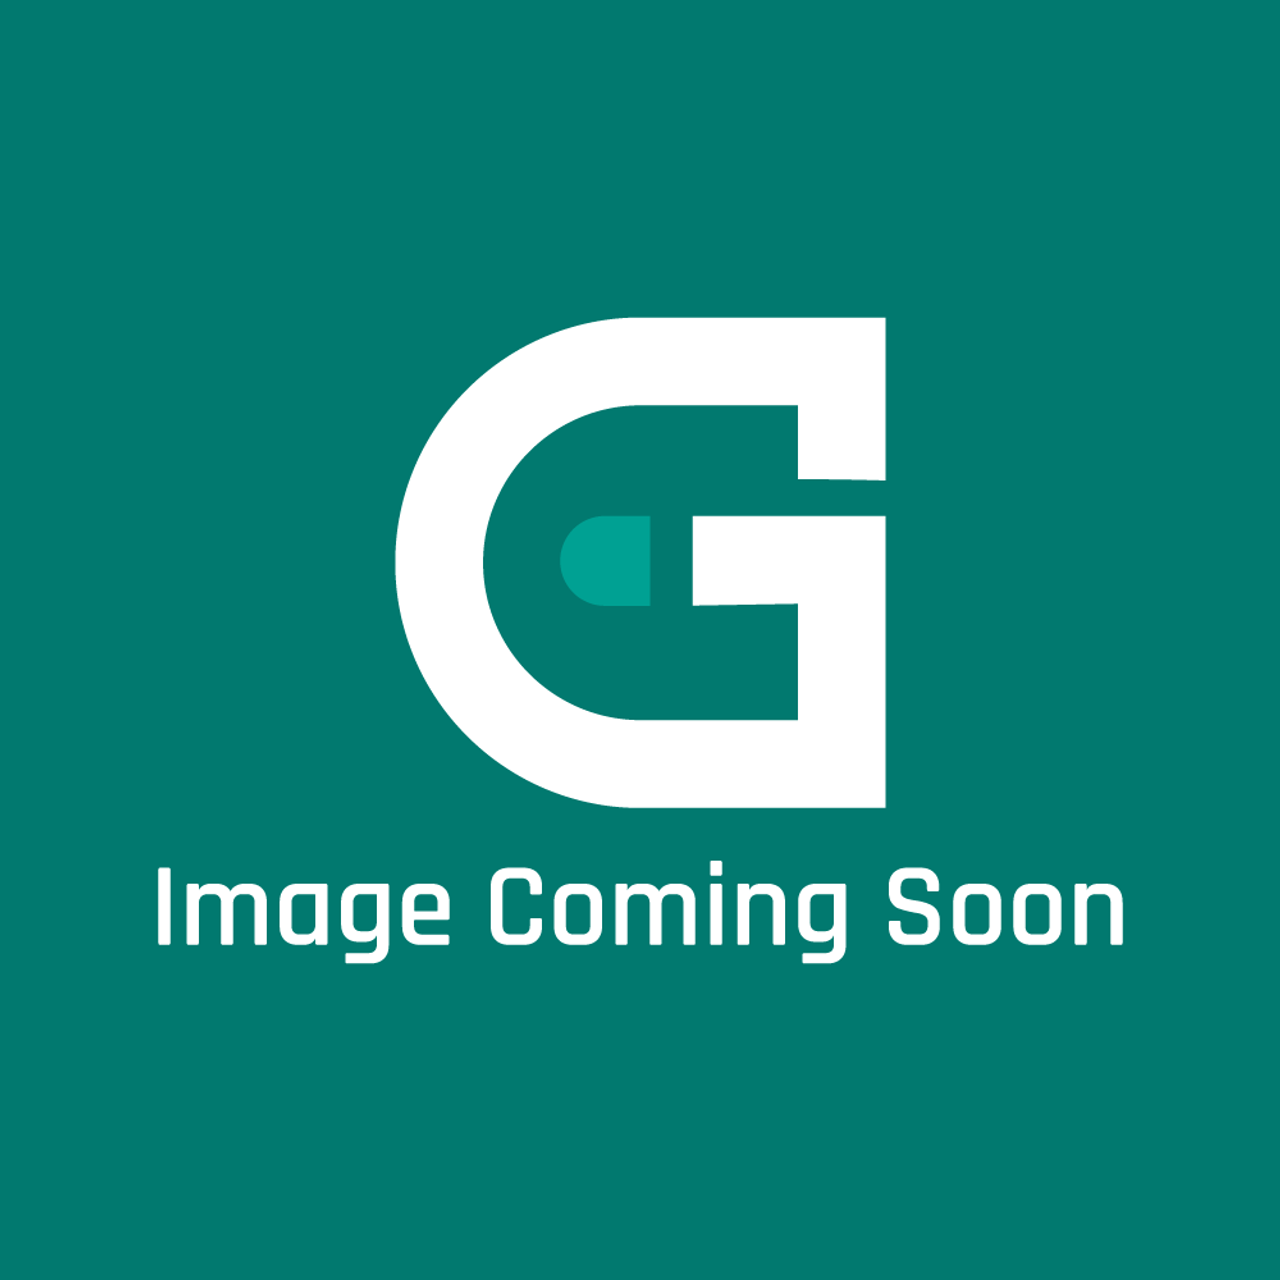 Taylor Freezer X77951-SER - Taylor Grill Hi-Limit Ki T - Image Coming Soon!